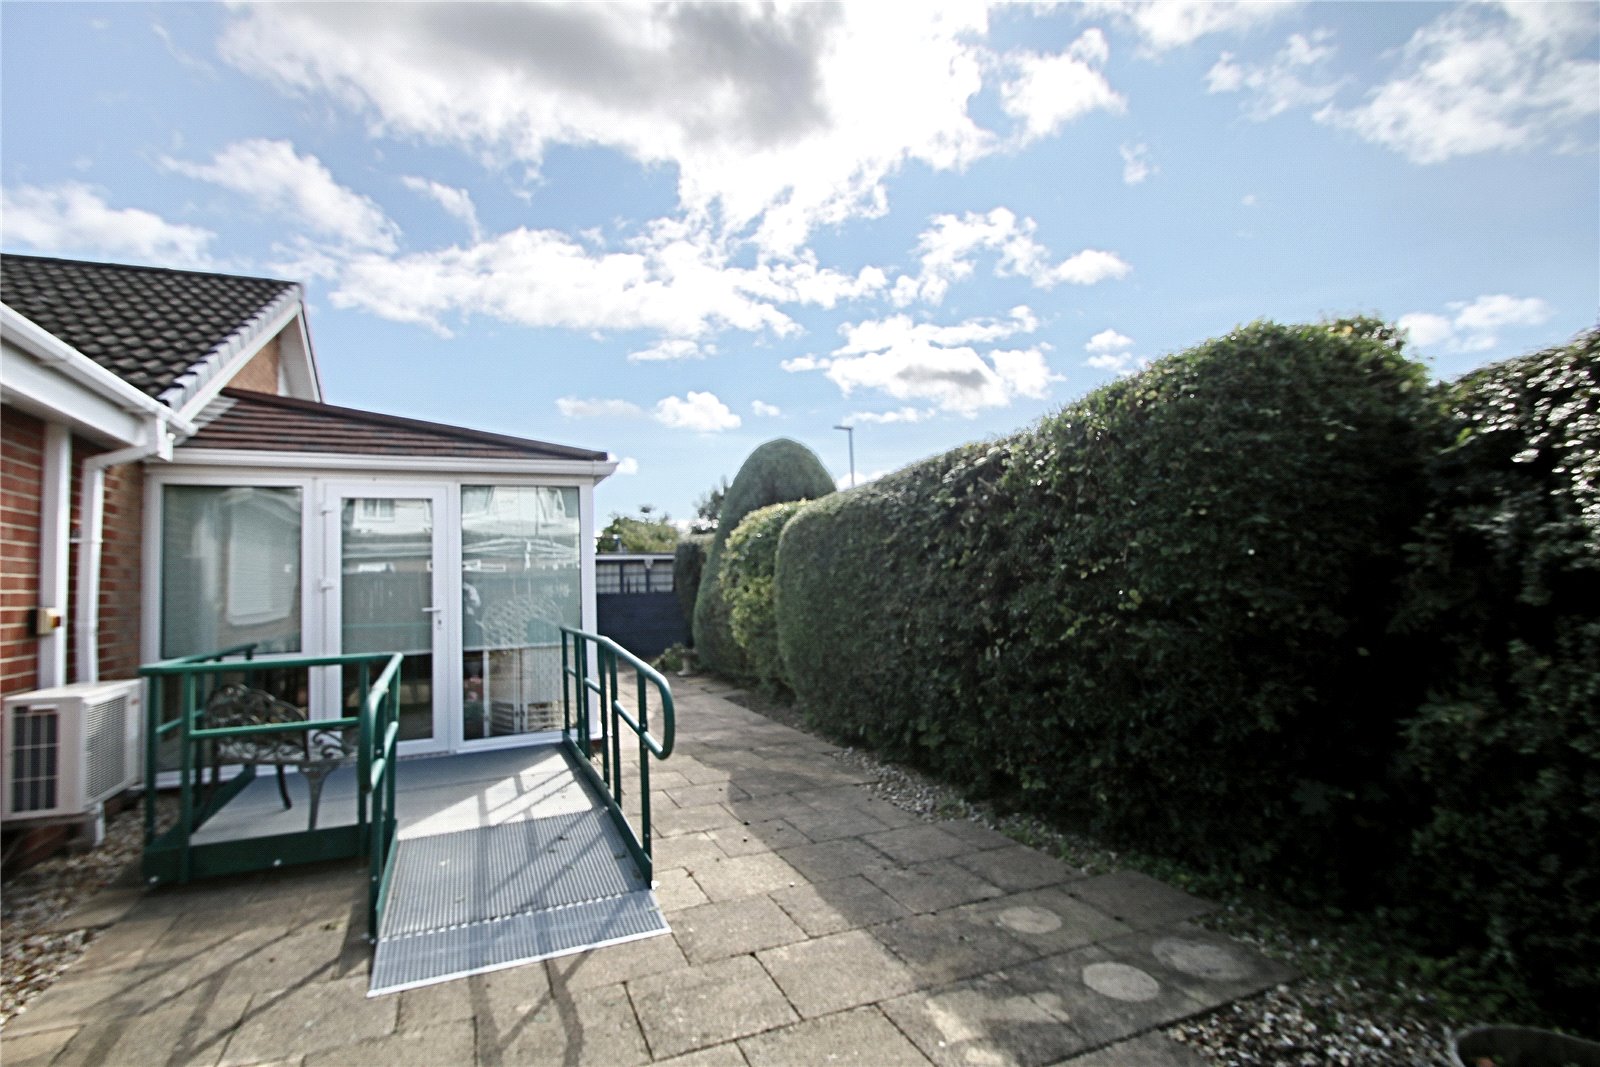 3 bed bungalow for sale in Hazel Slade, Eaglescliffe  - Property Image 17